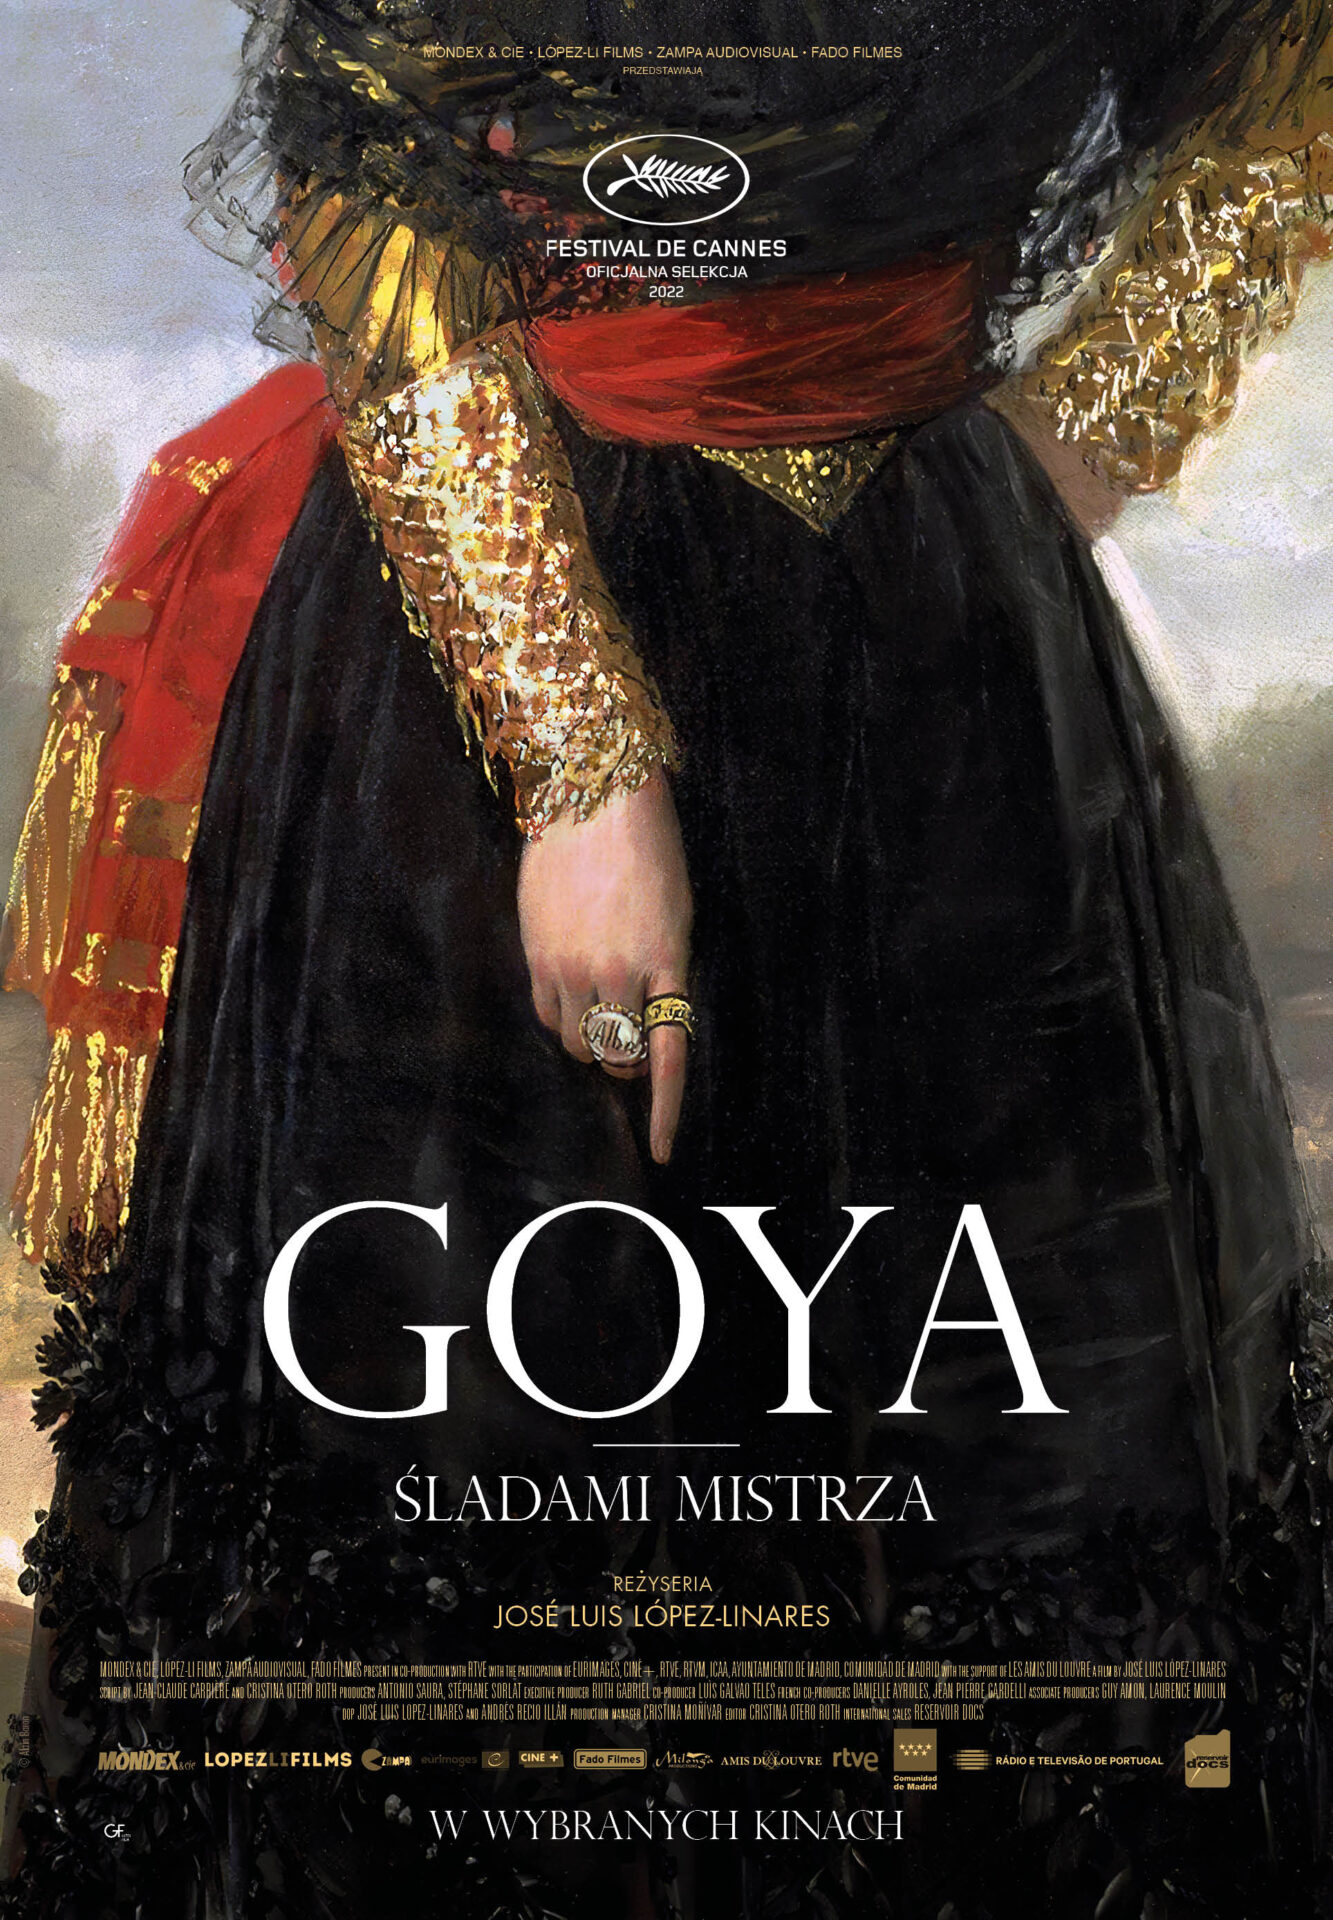 na plakacie fragment obrazu Goyi, postać kobiety